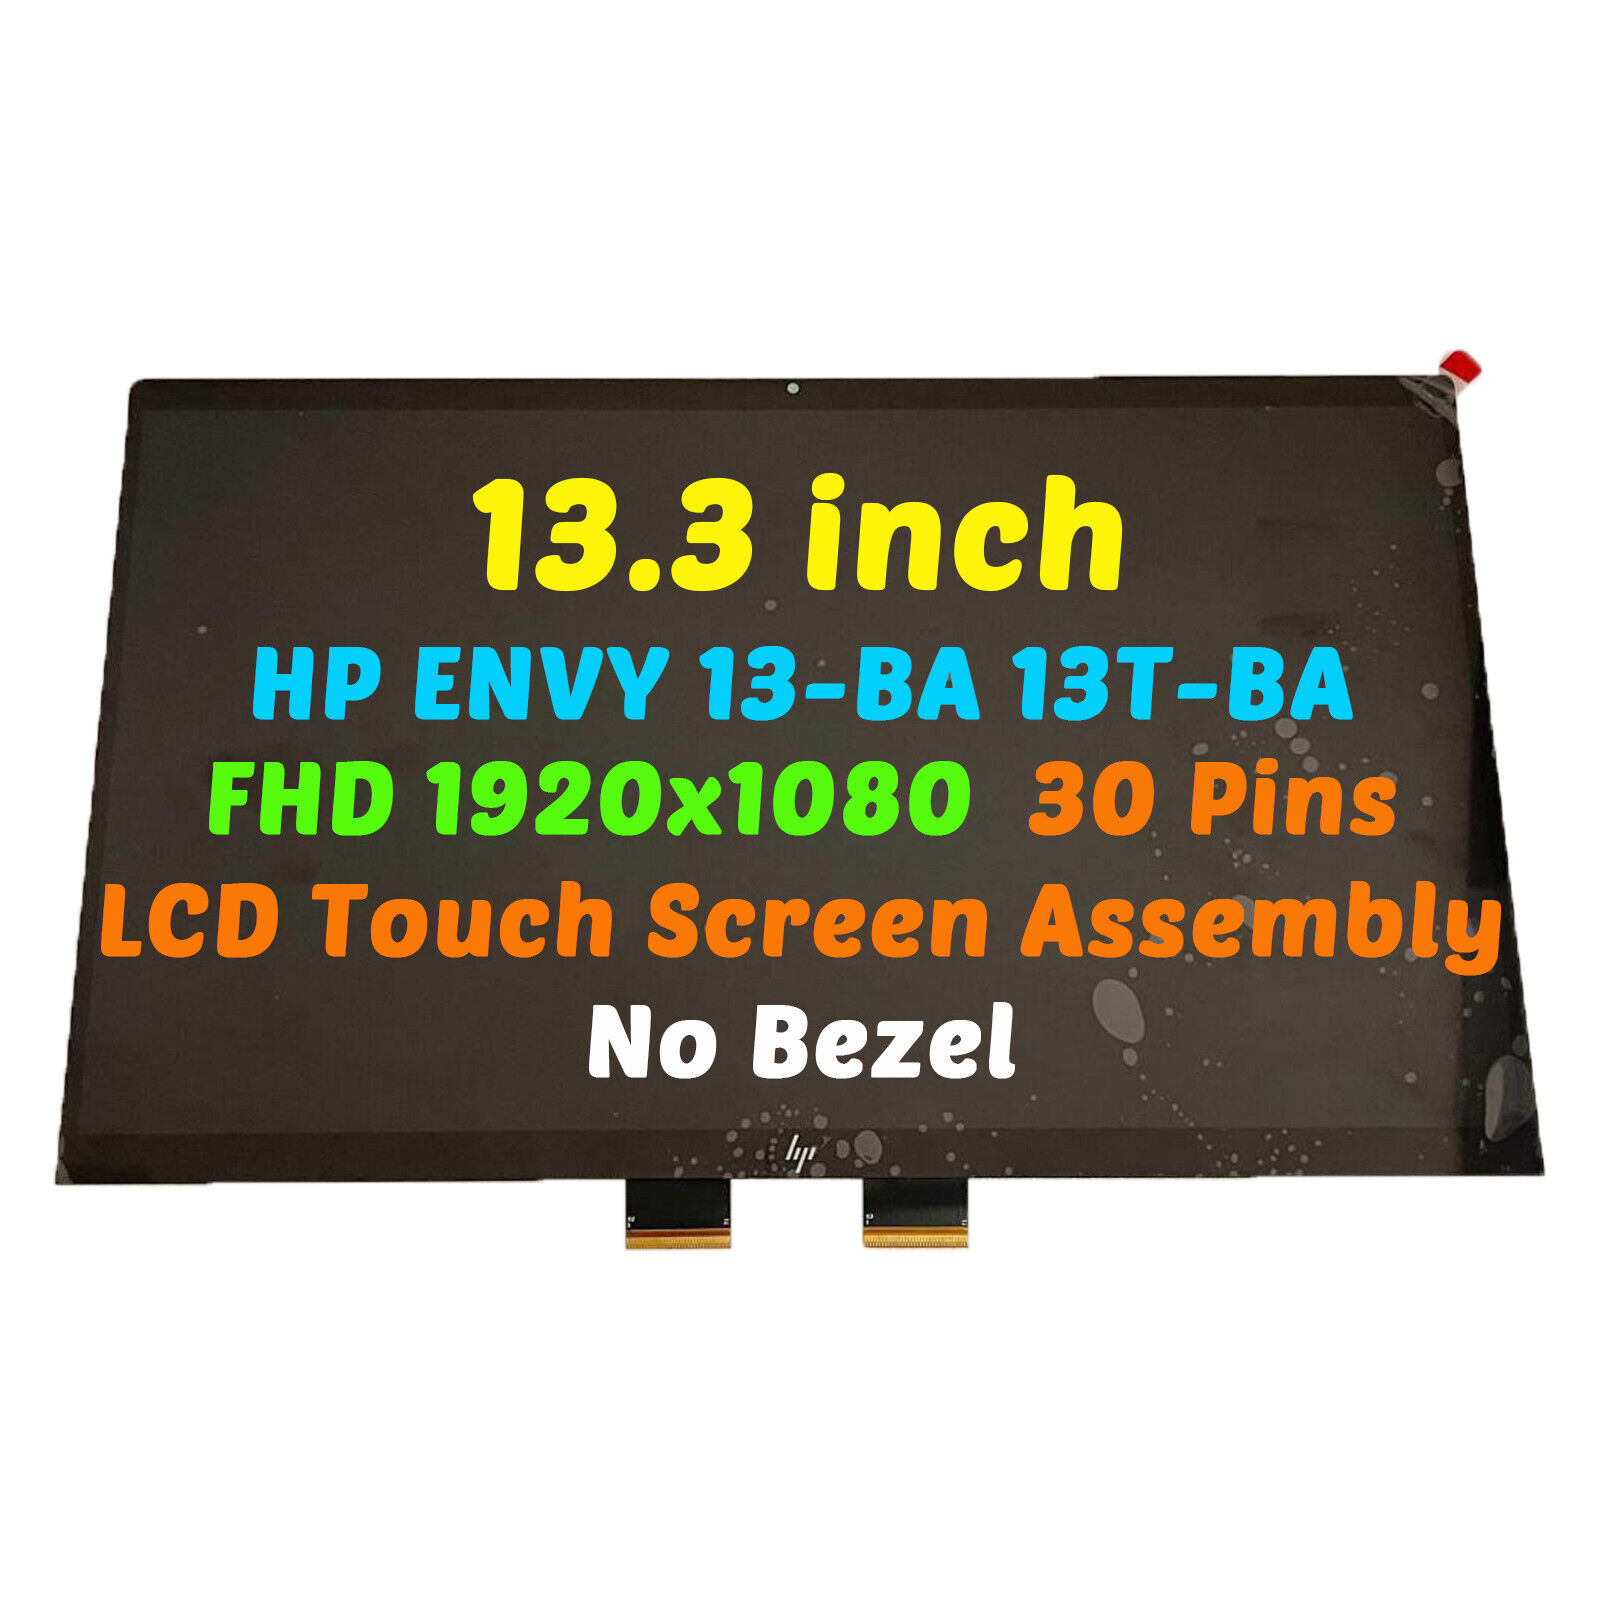 L96784-001 for HP 13T-BA000 13-BA0001CA 13-BA0047WM FHD LCD TouchScreen Assembly